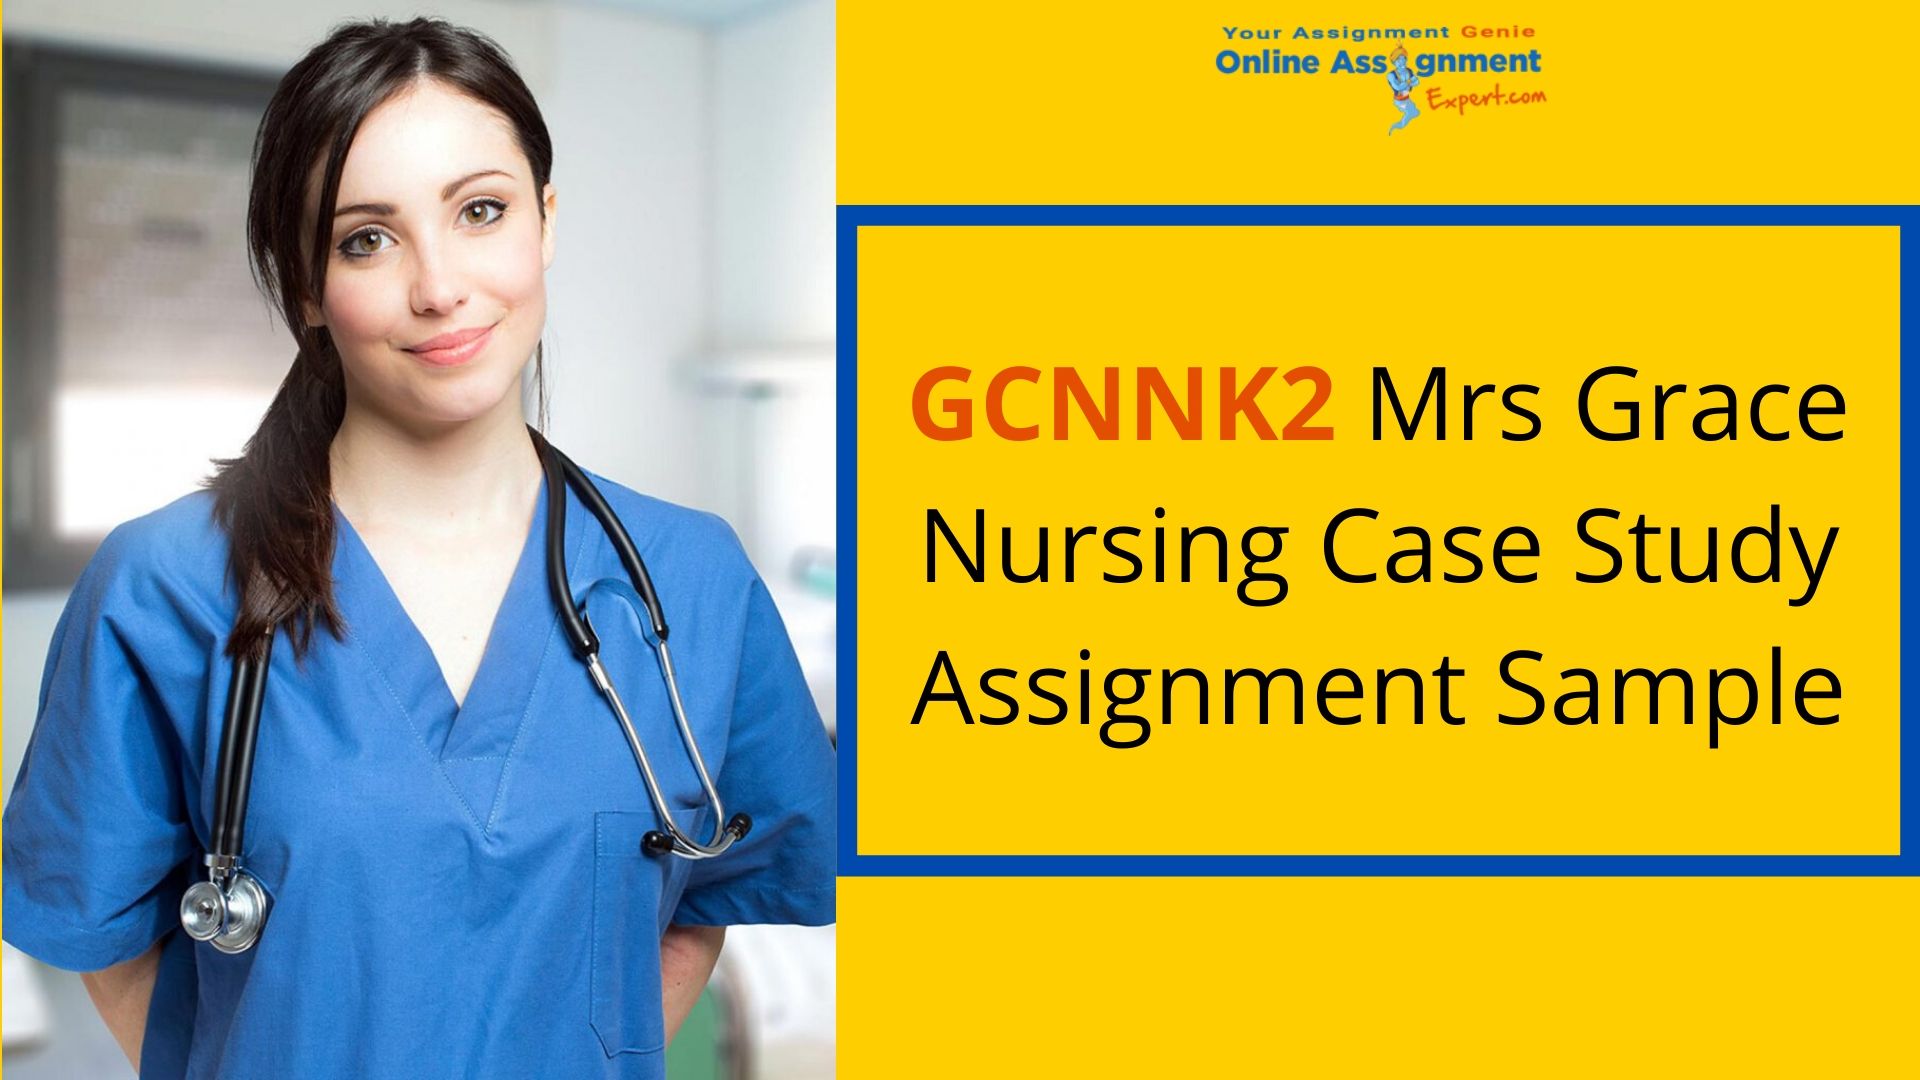 Nursing Assignment Sample: GCNNK2 Mrs Grace Case Study